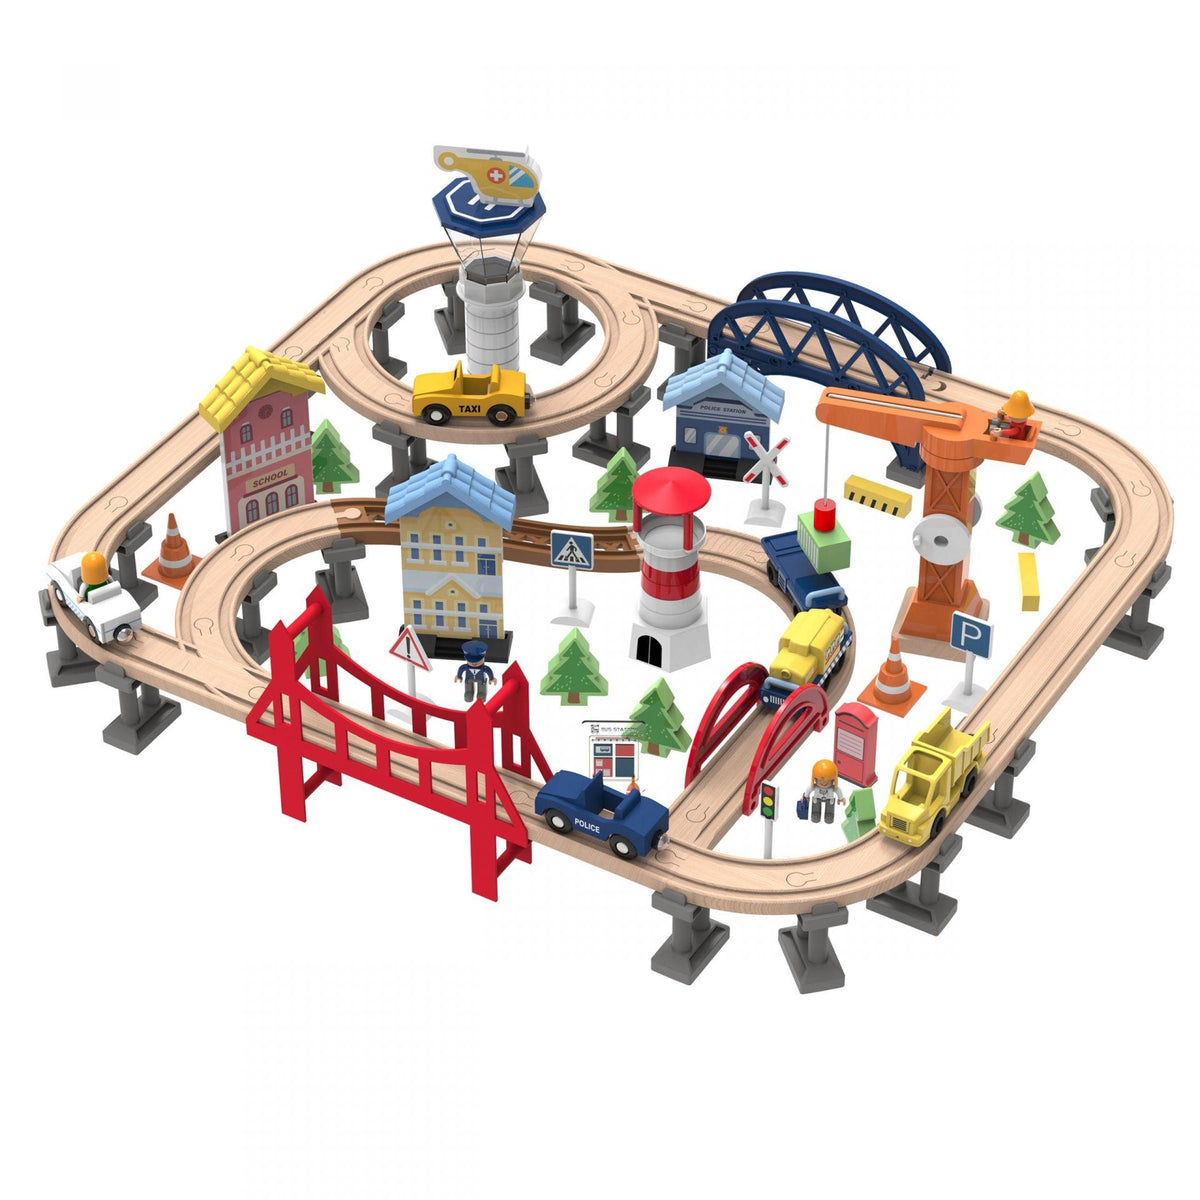 Leo & Friends - Railway City Set 100 pcs product image